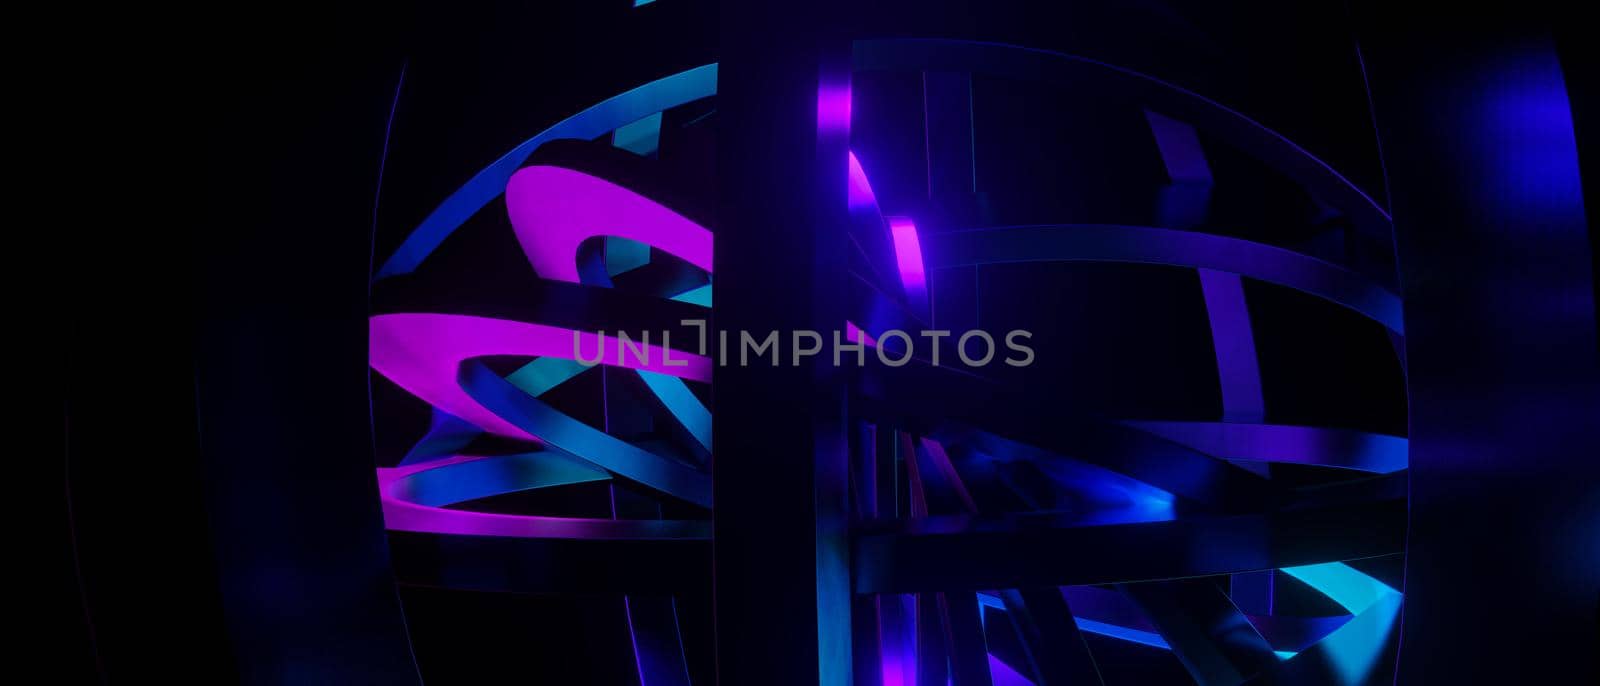 Abstract Elegant Overlapping Lines Or Shapes Violet Background 3D Illustration